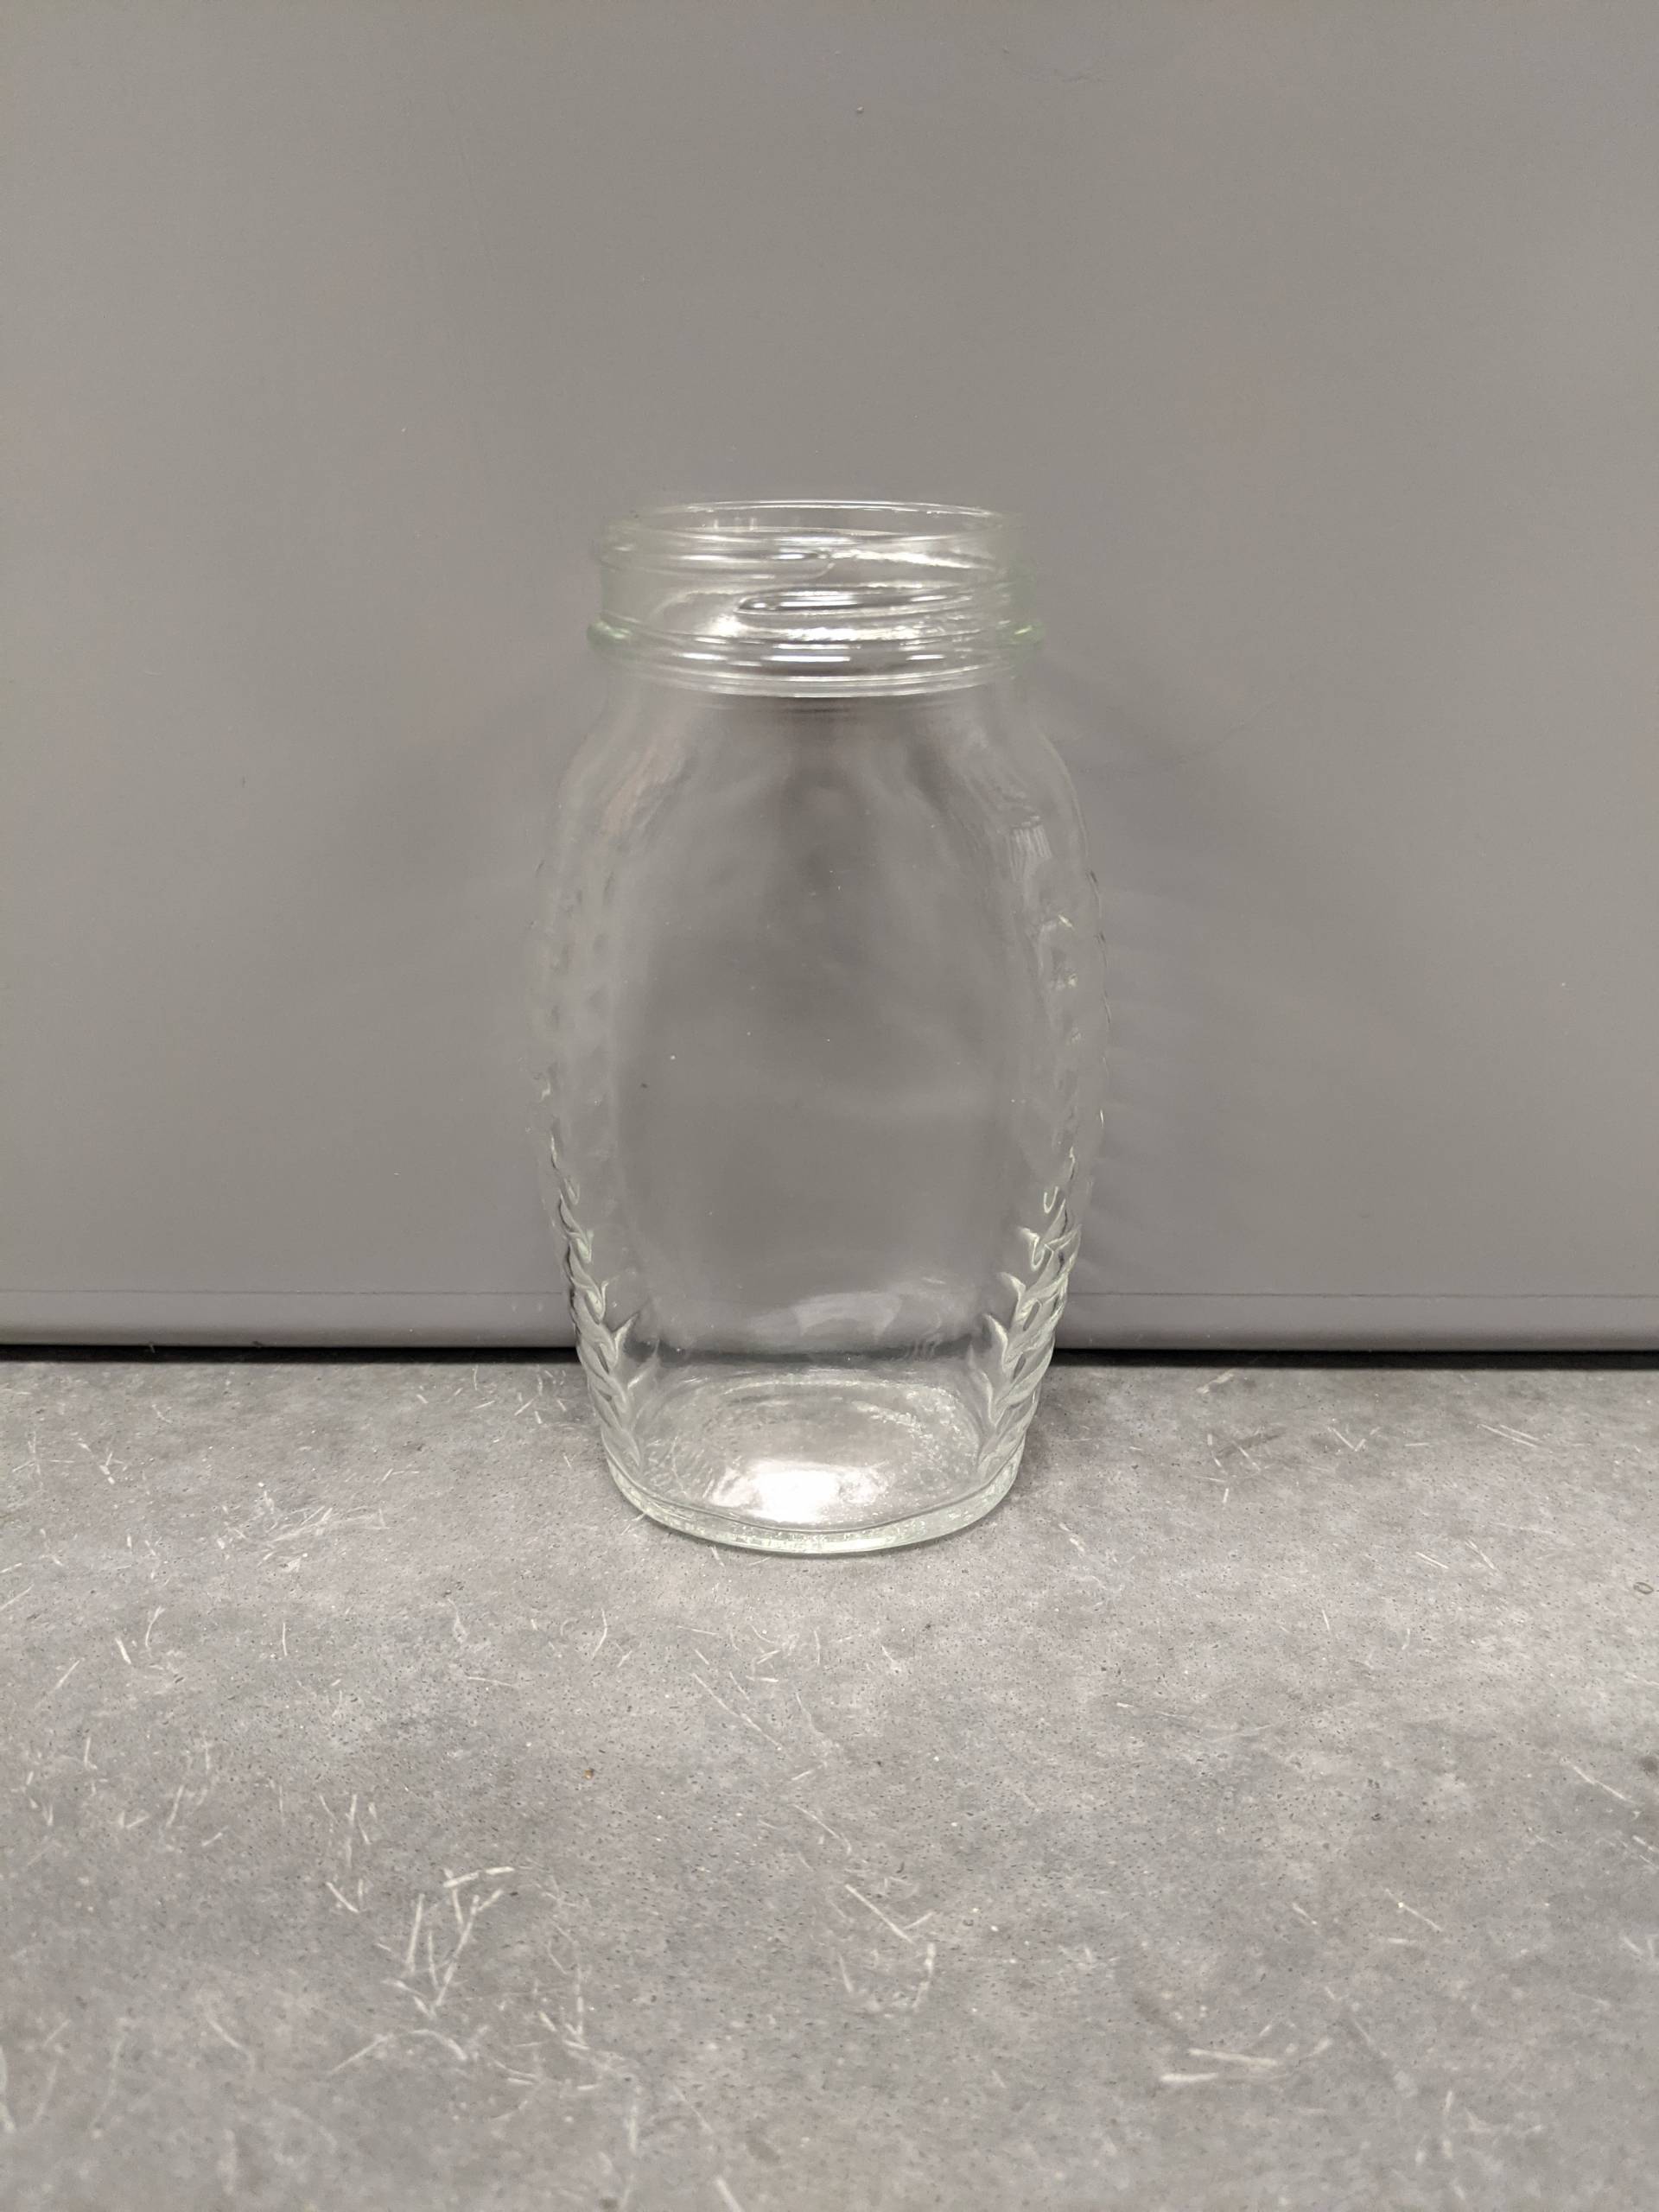 Queenline Jar with Lid, 8 oz, 16 oz or 4 lb - Queen Right Colonies